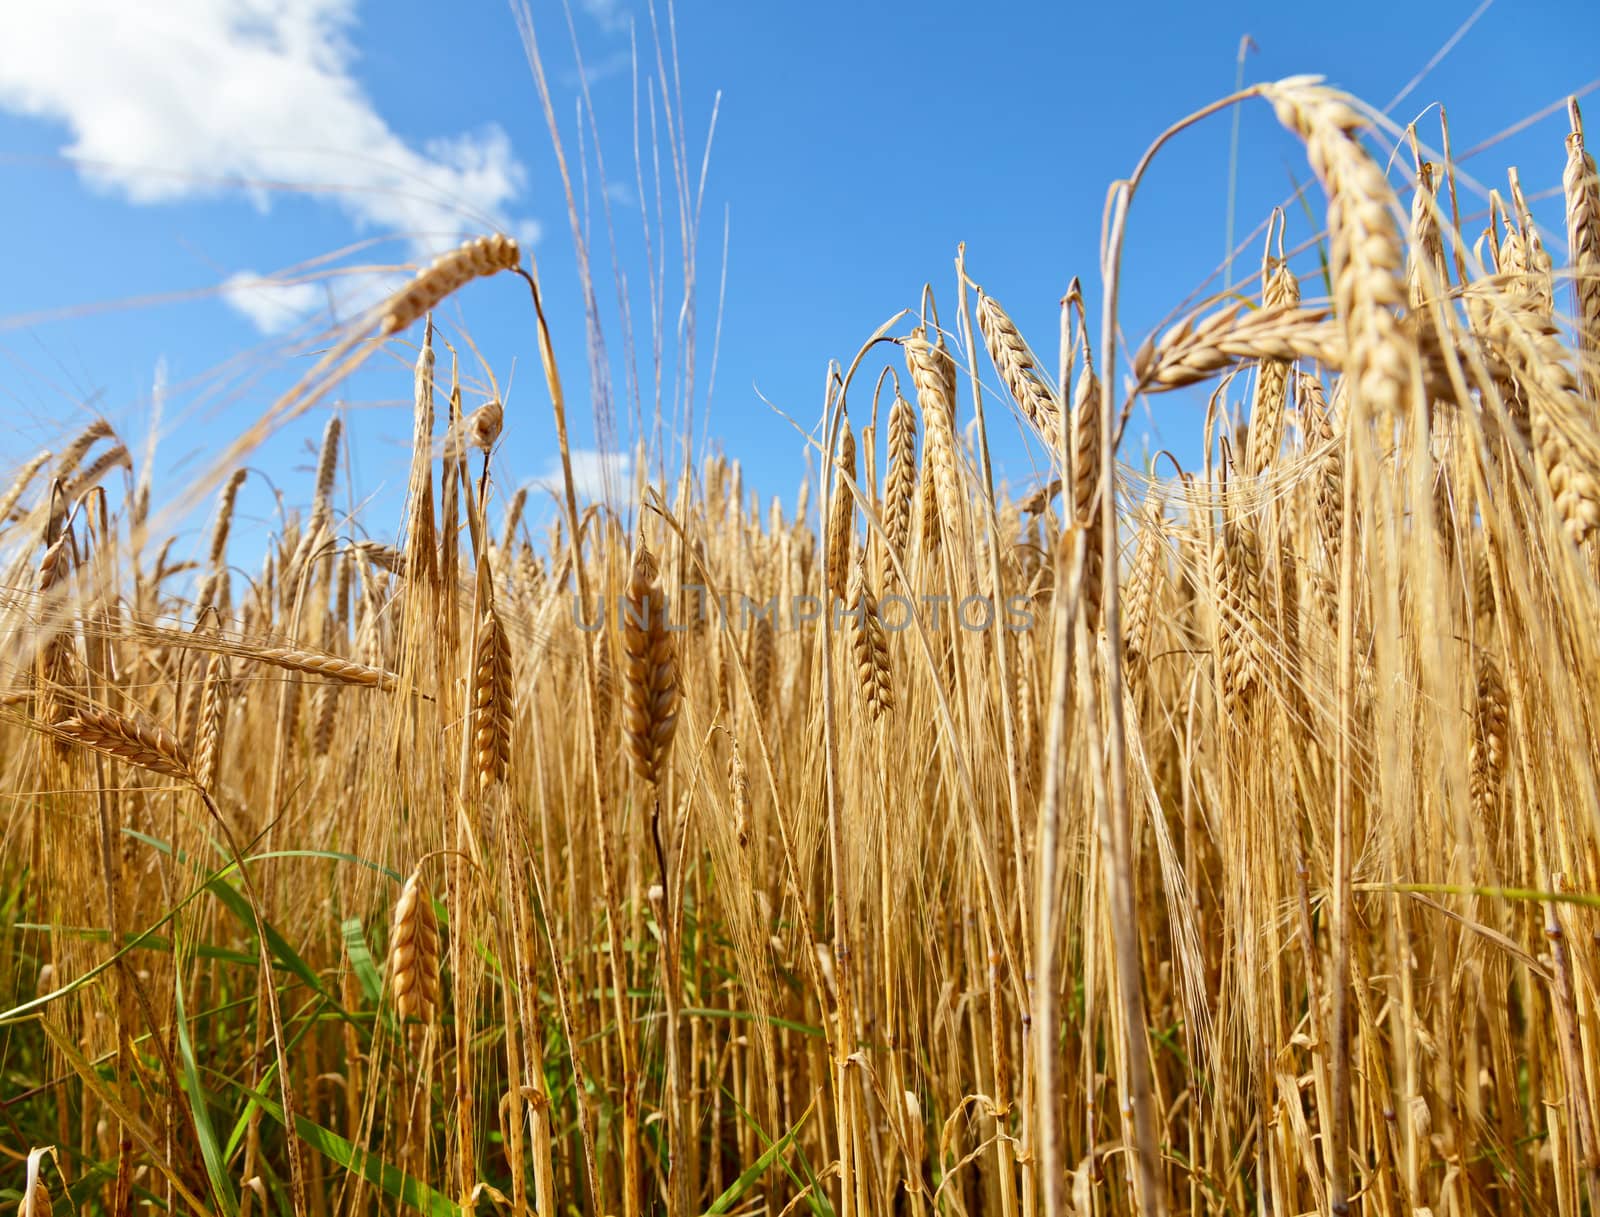 Ripe golden barley field against blue sky